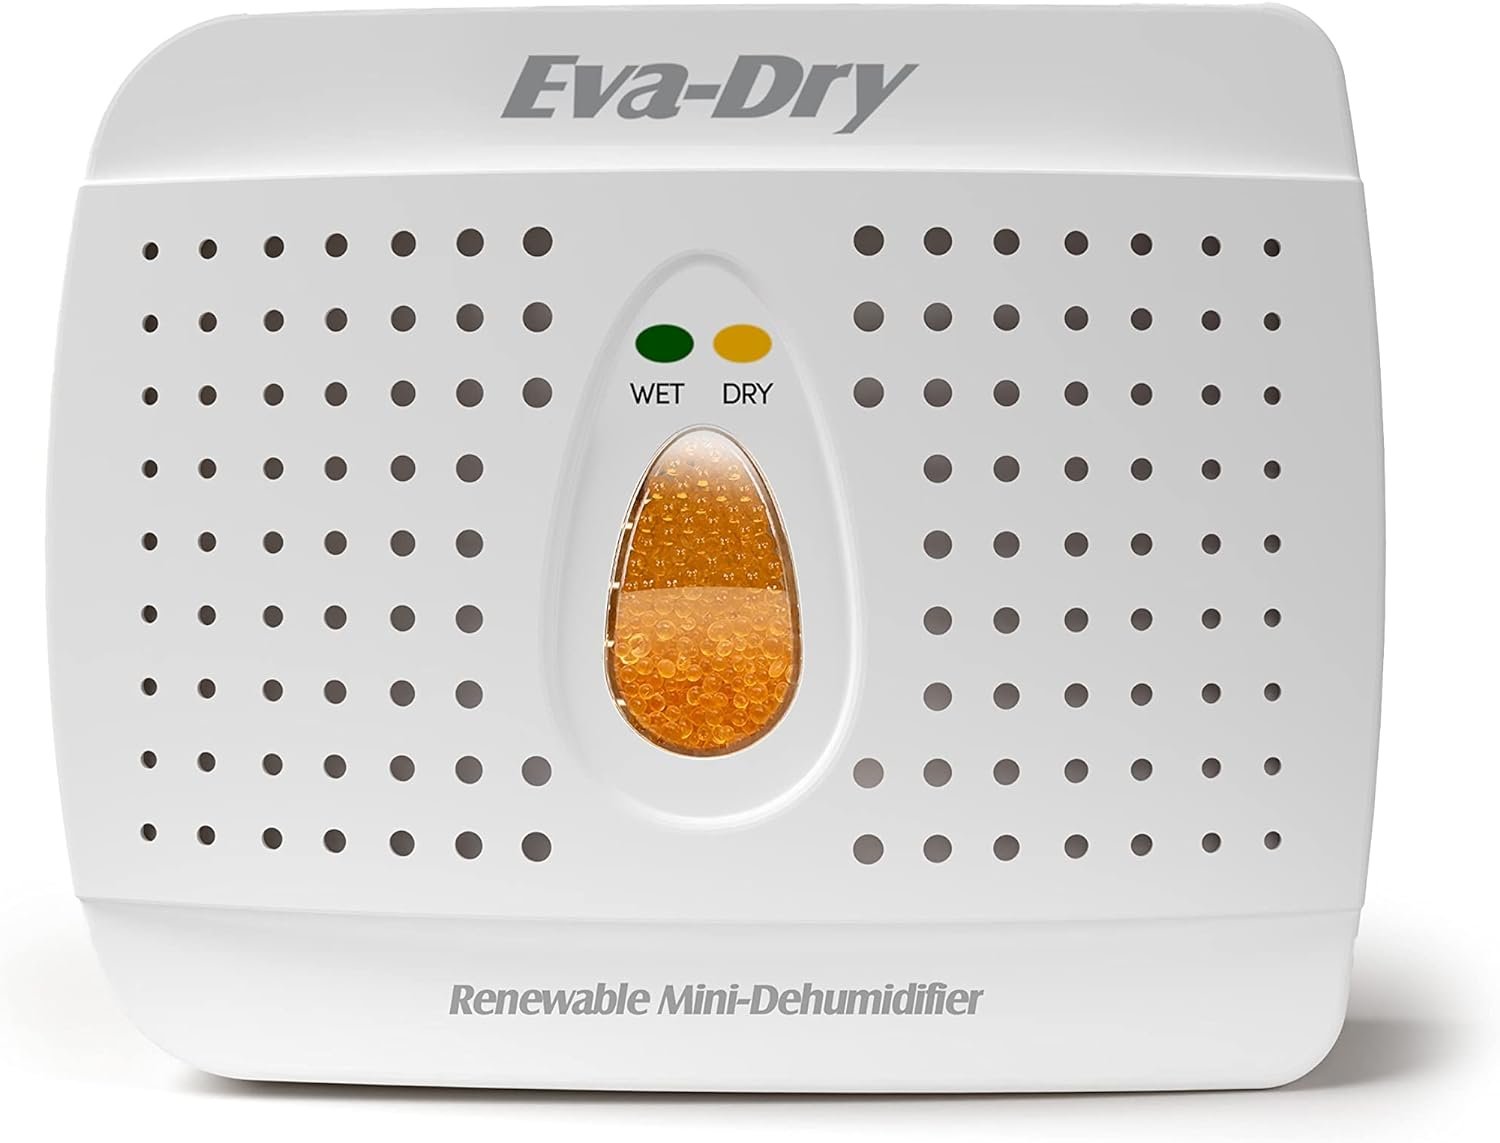 Eva-dry E-333 Mini Dehumidifier Review